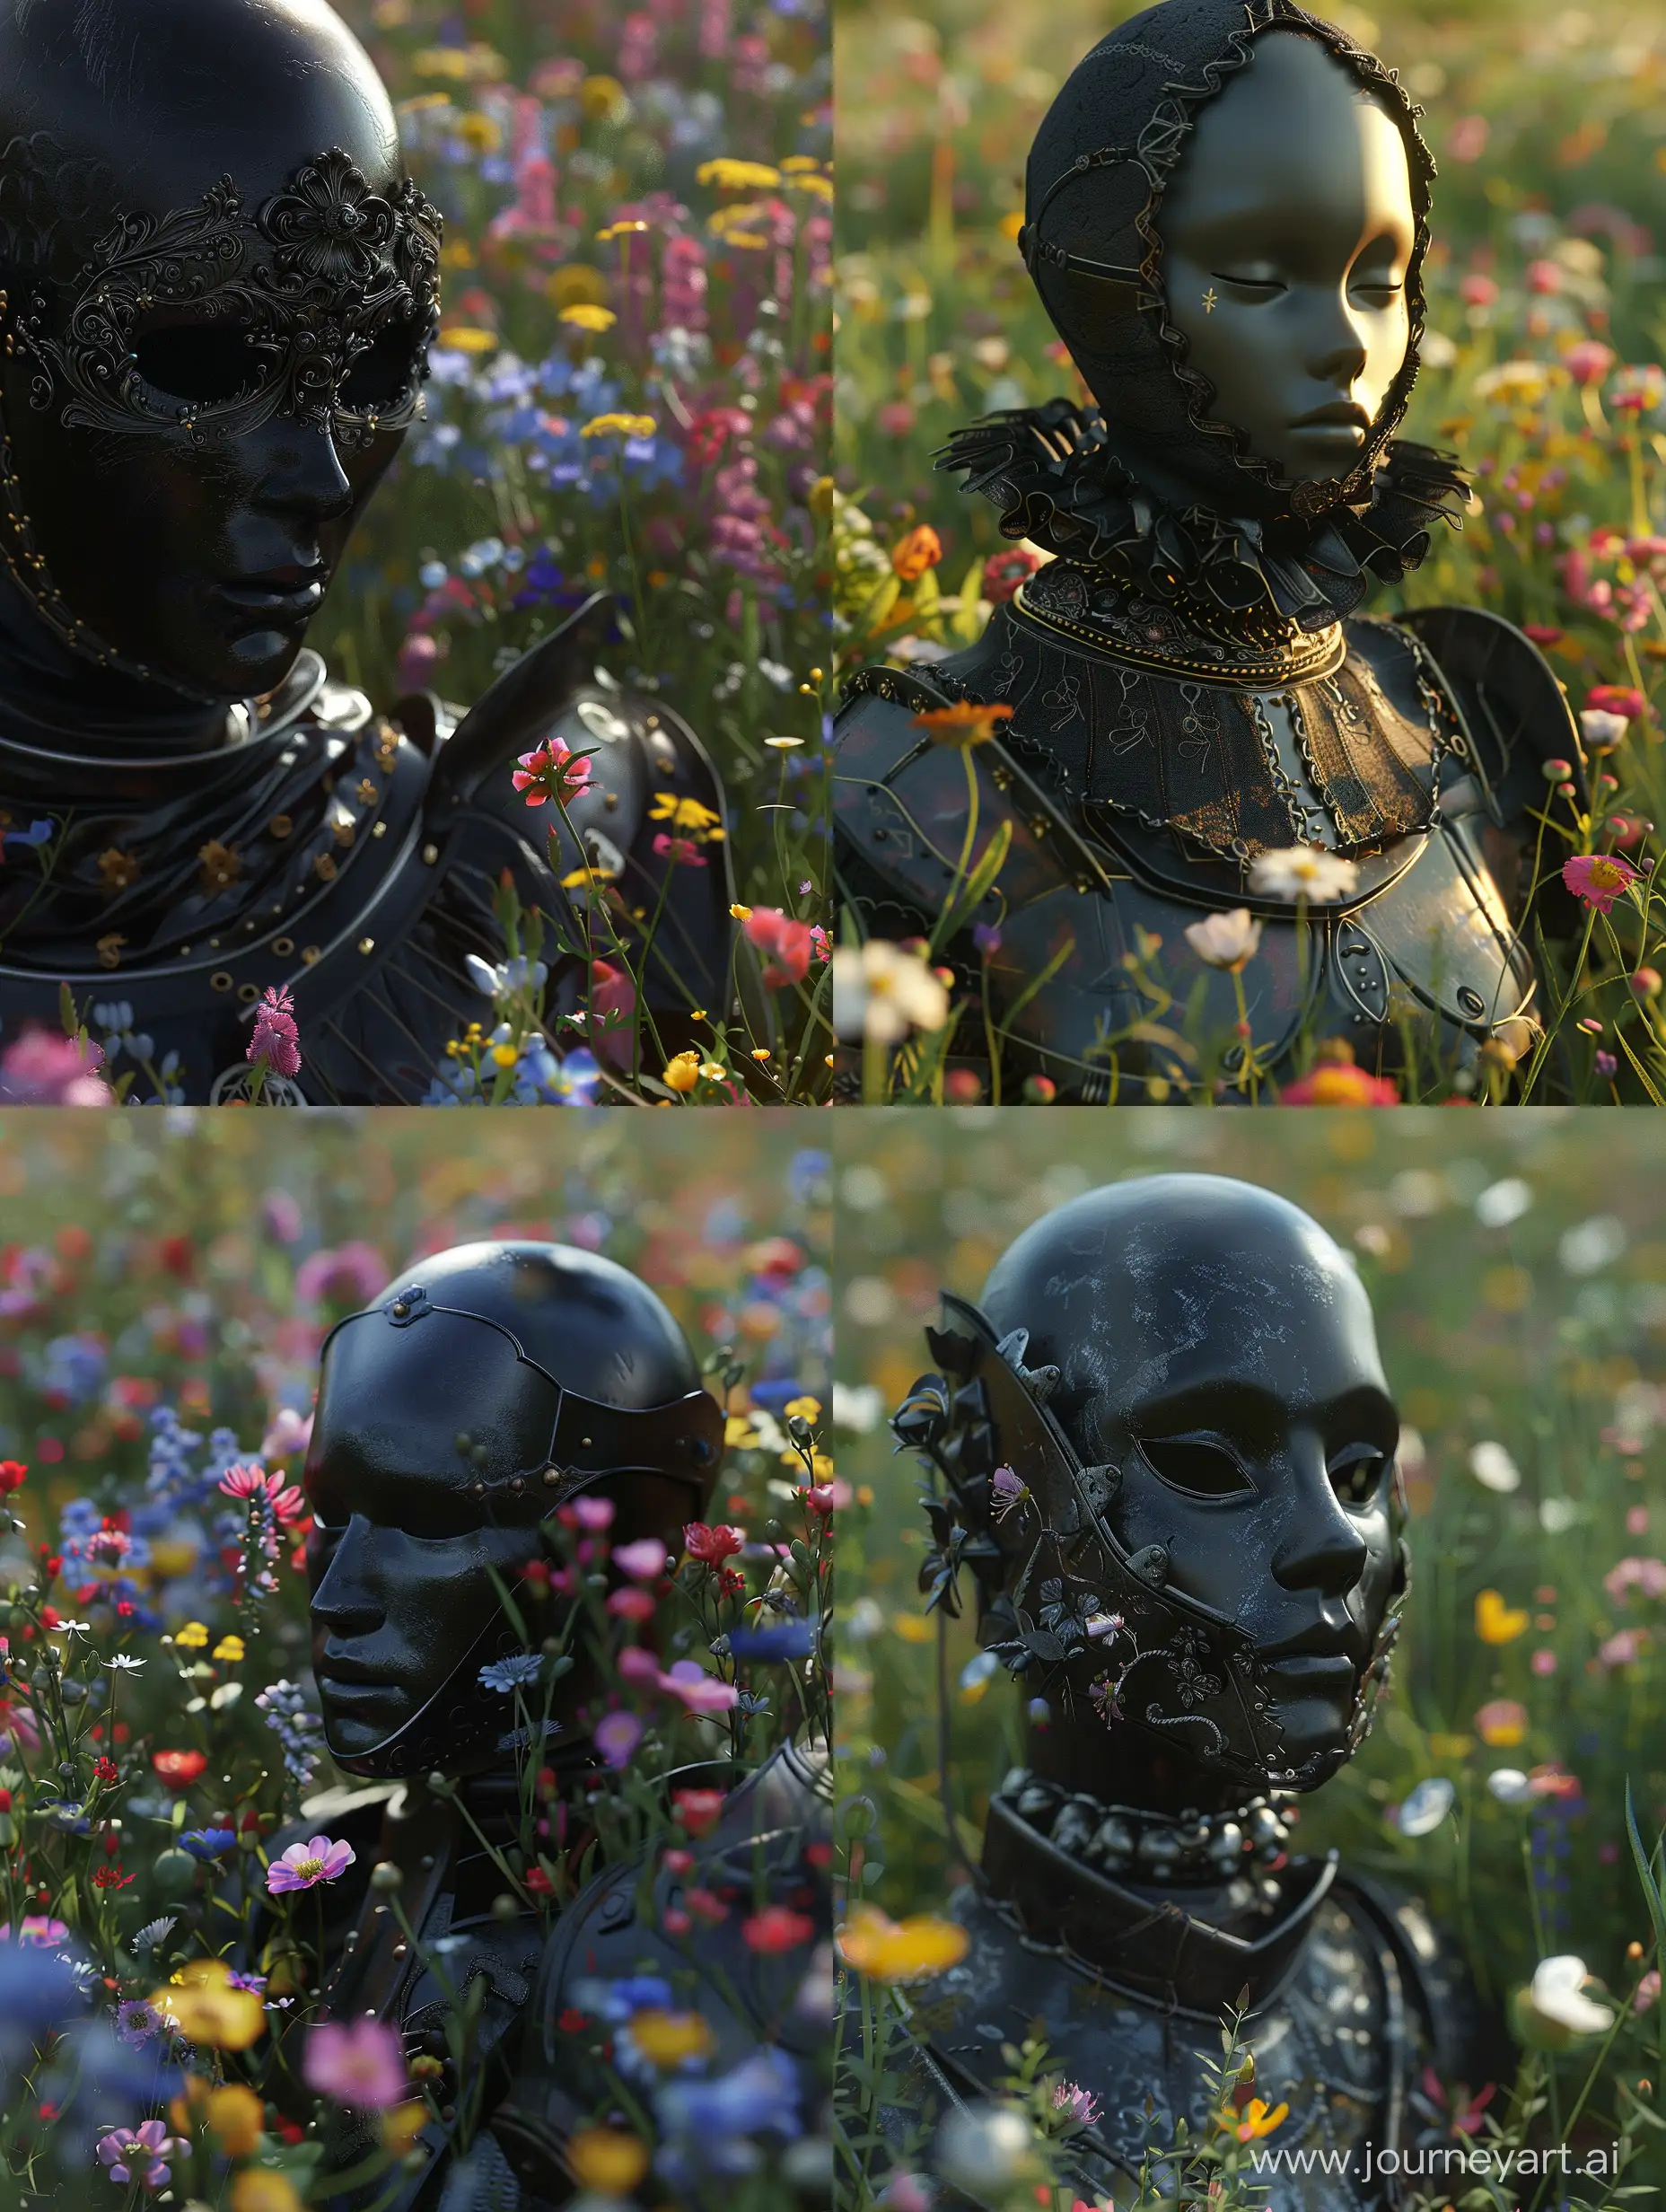 Mannequin-amidst-Flowers-Robert-Brackmans-Renaissance-Portrait-with-Victorian-Armor-and-Black-Pulcinella-Mask